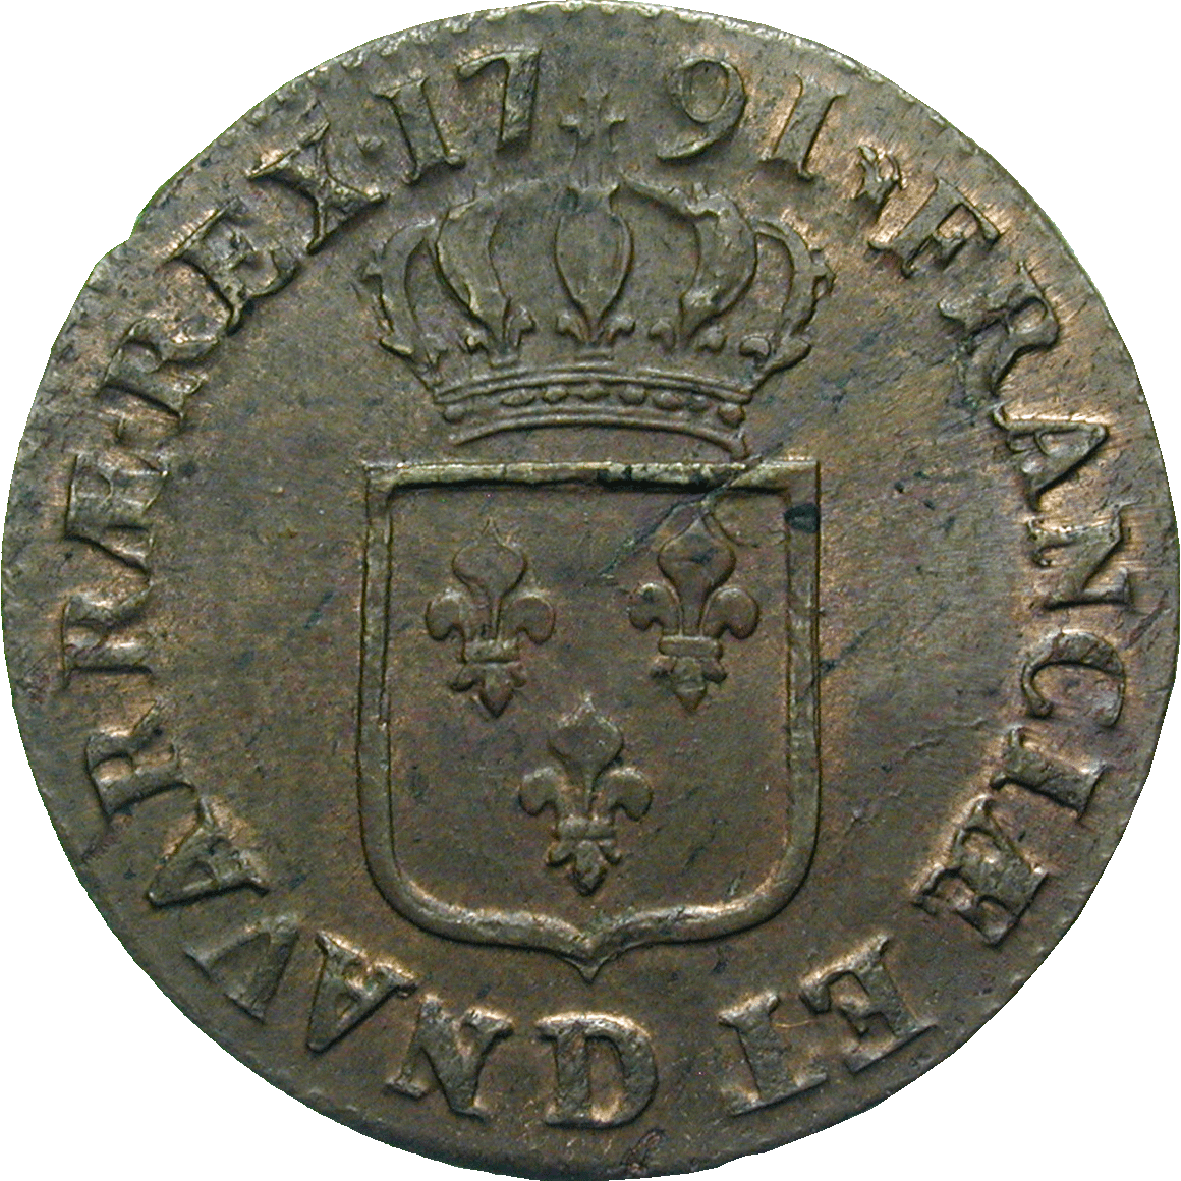 Kingdom of France, Louis XVI, Sol 1791 (reverse)